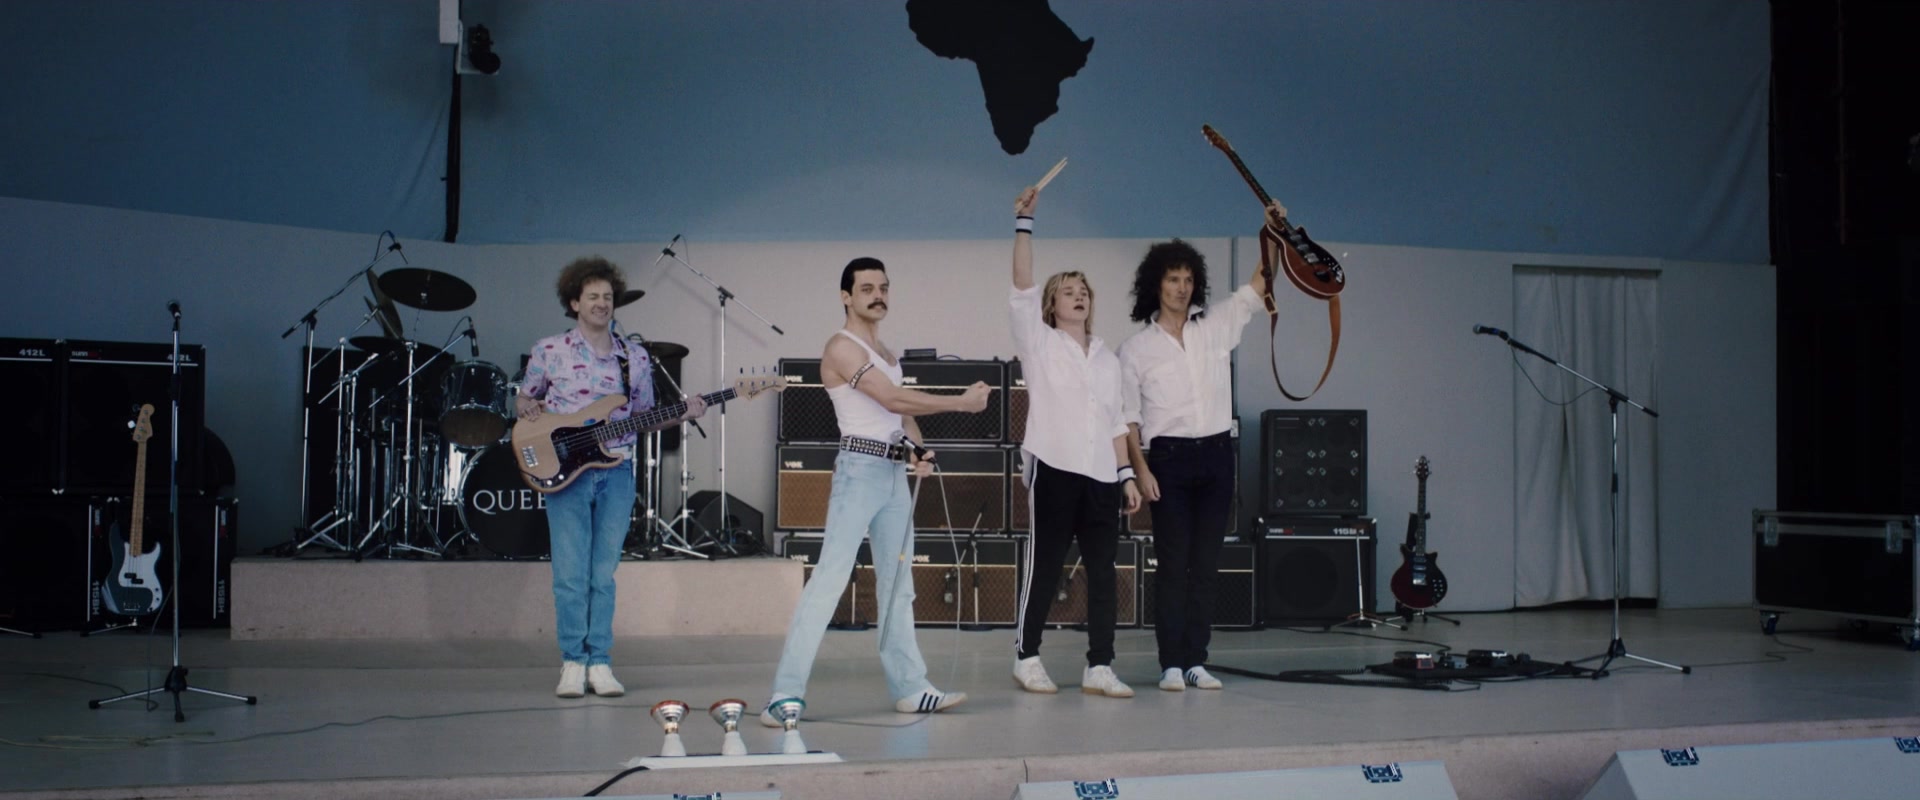 Adidas Shoes (White) Worn by Rami Malek in Bohemian Rhapsody (2018) Movie1920 x 800